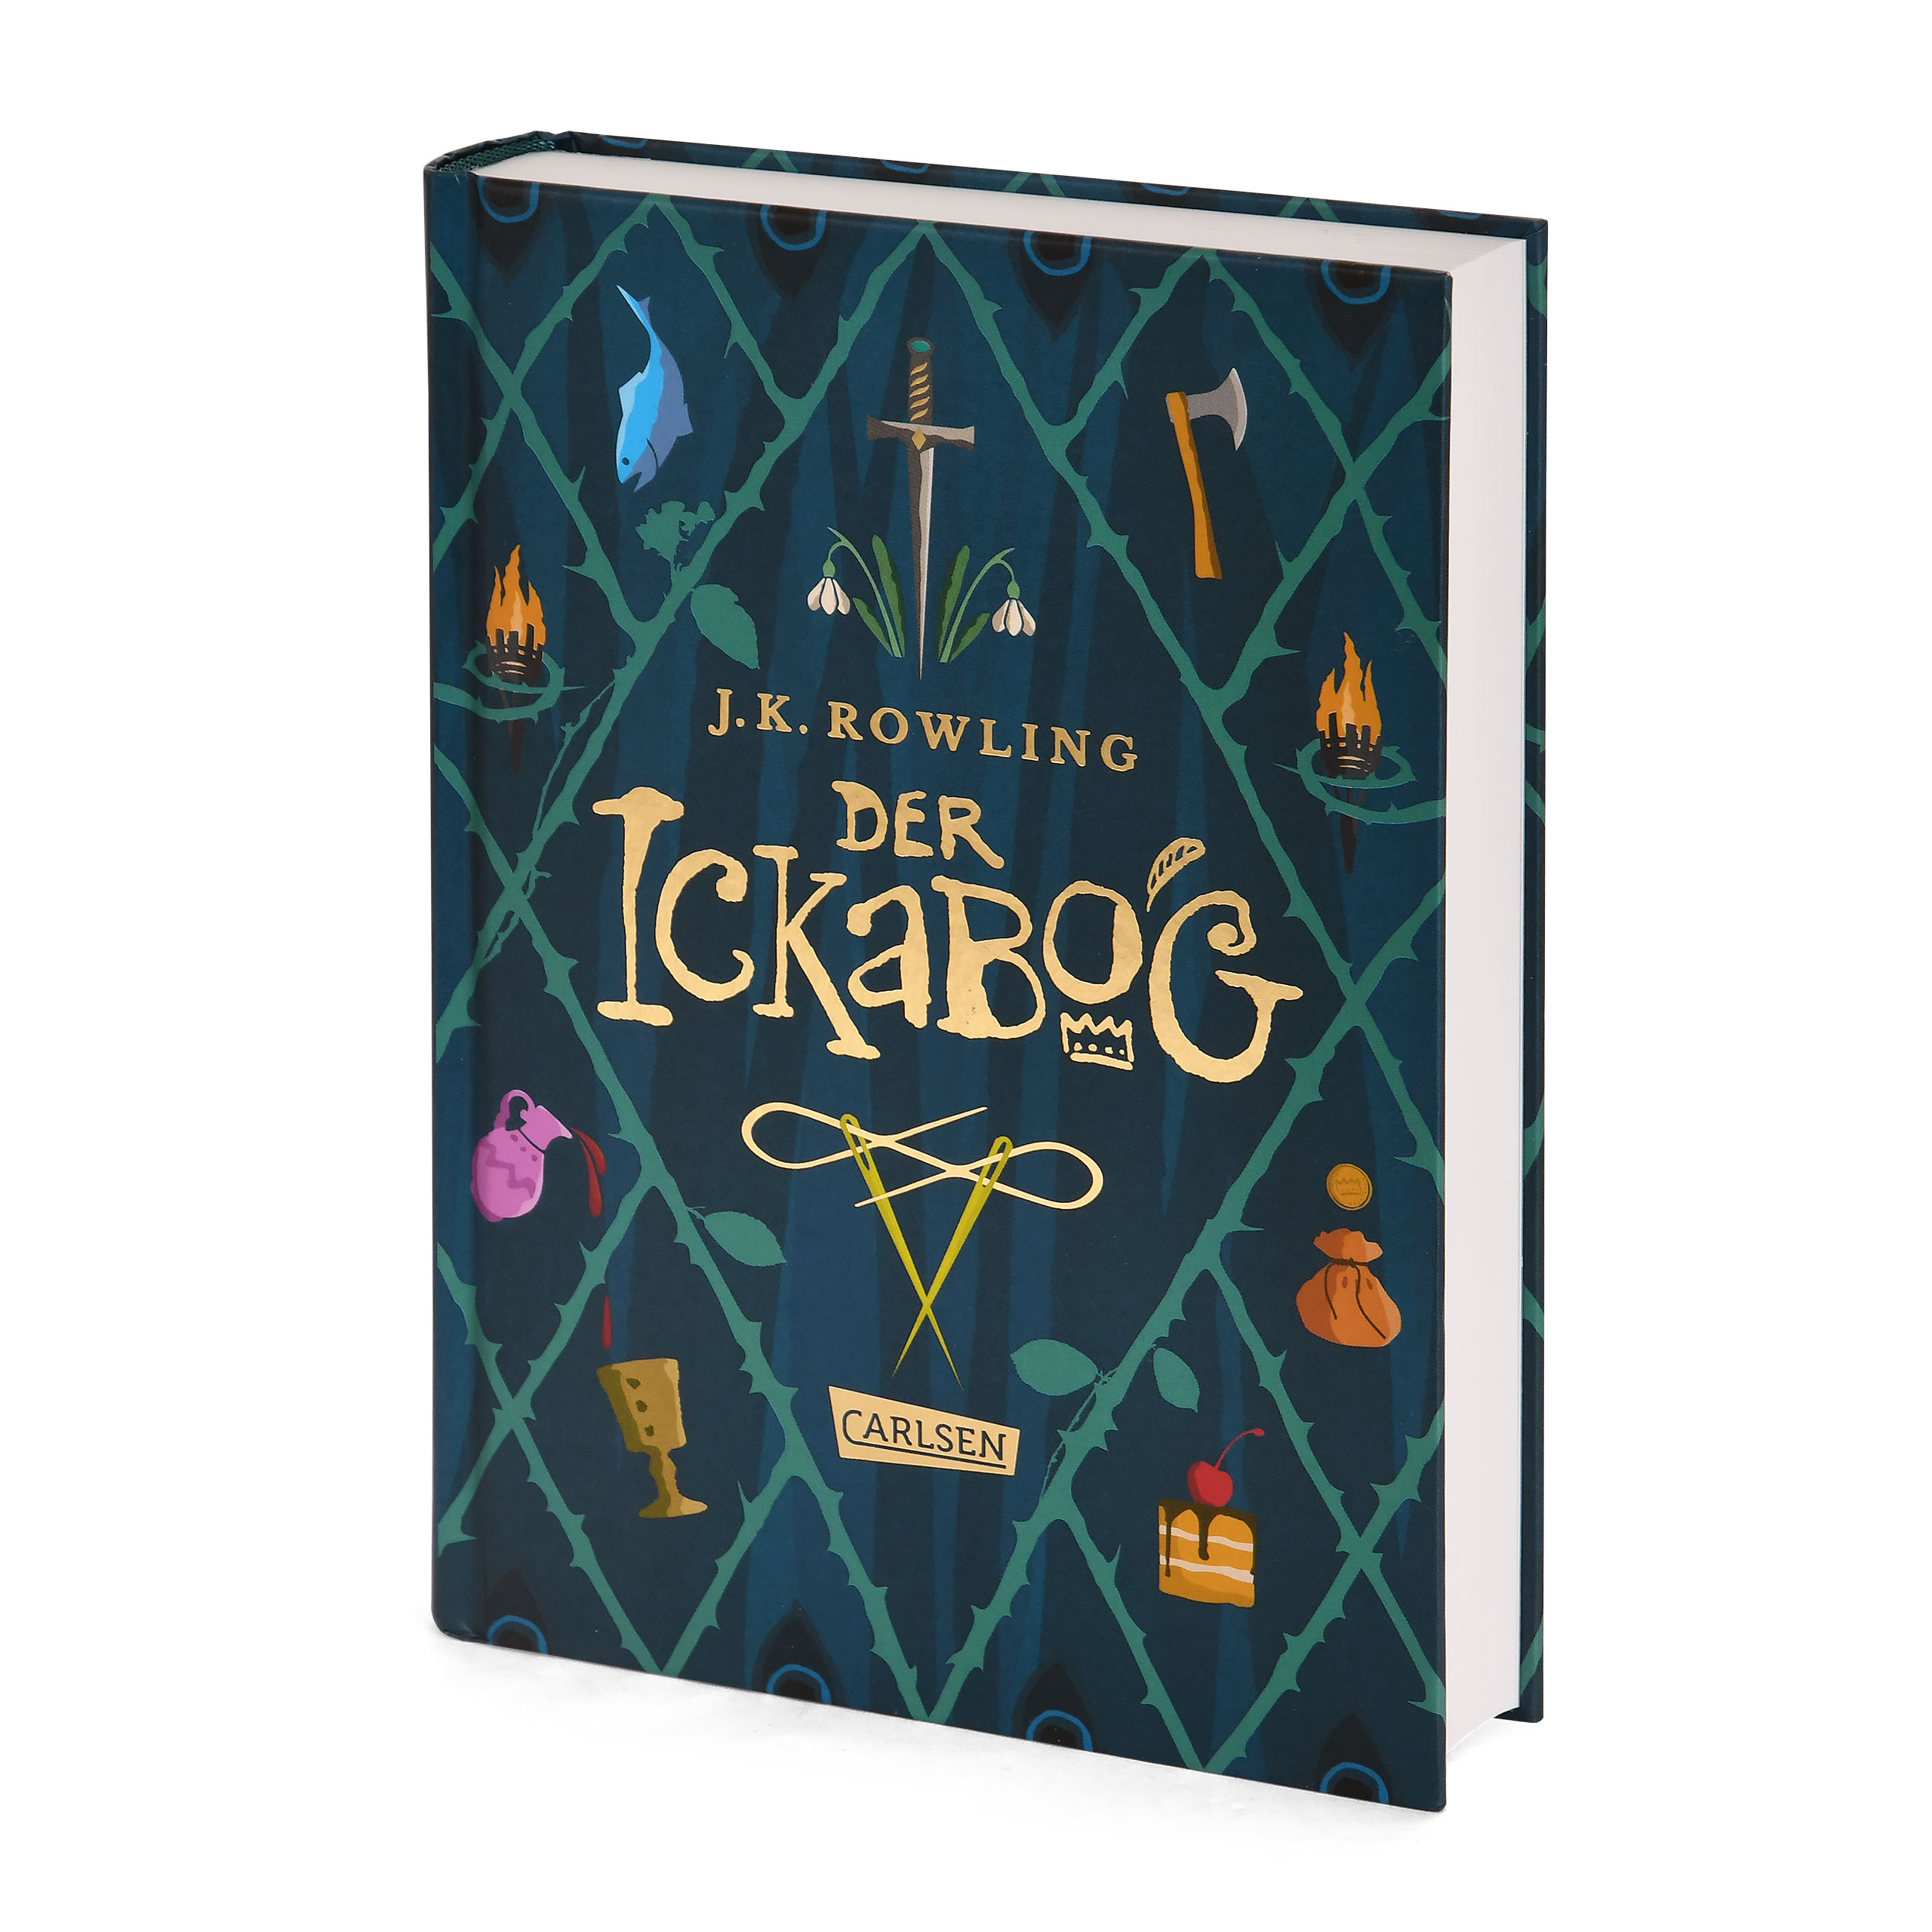 The Ickabog - Hardcover Edition